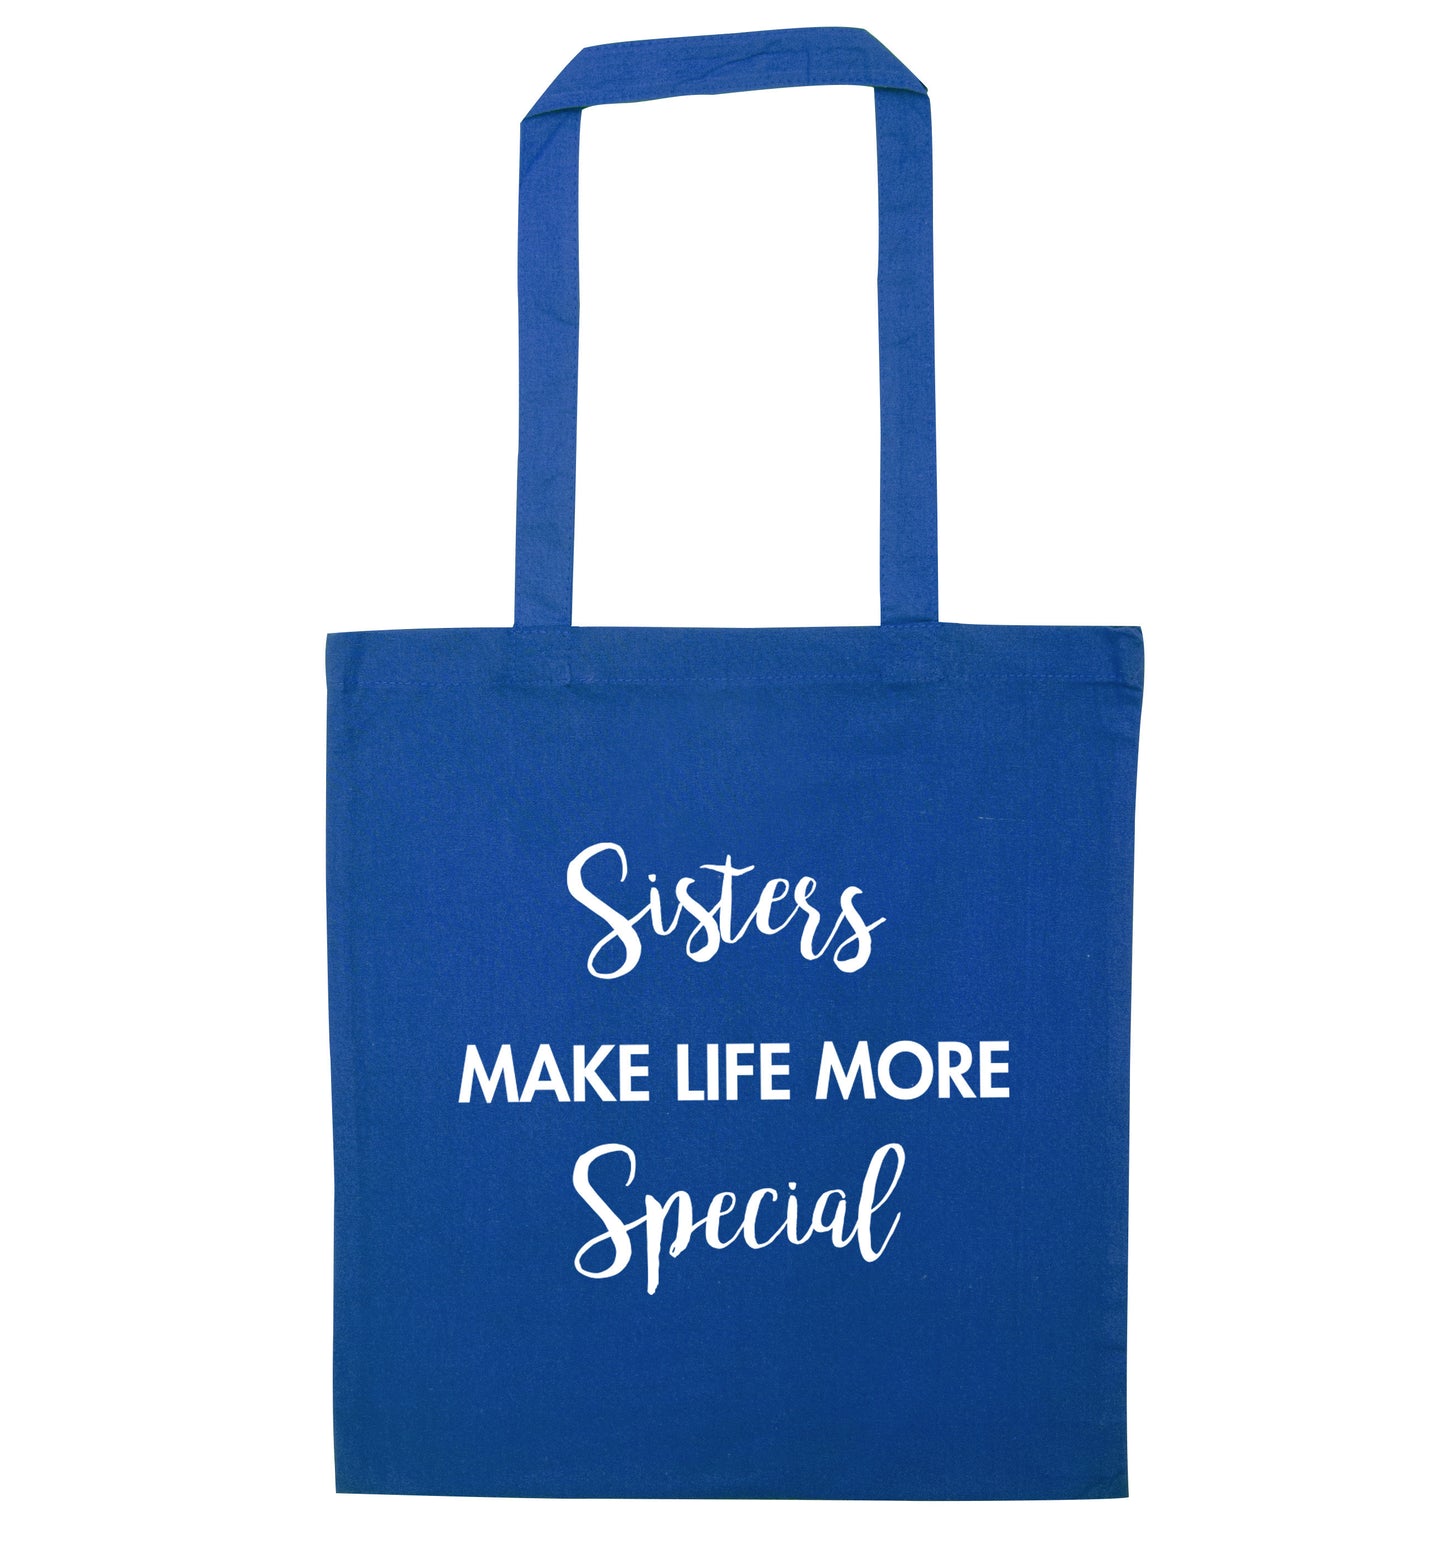 Sisters make life more special blue tote bag